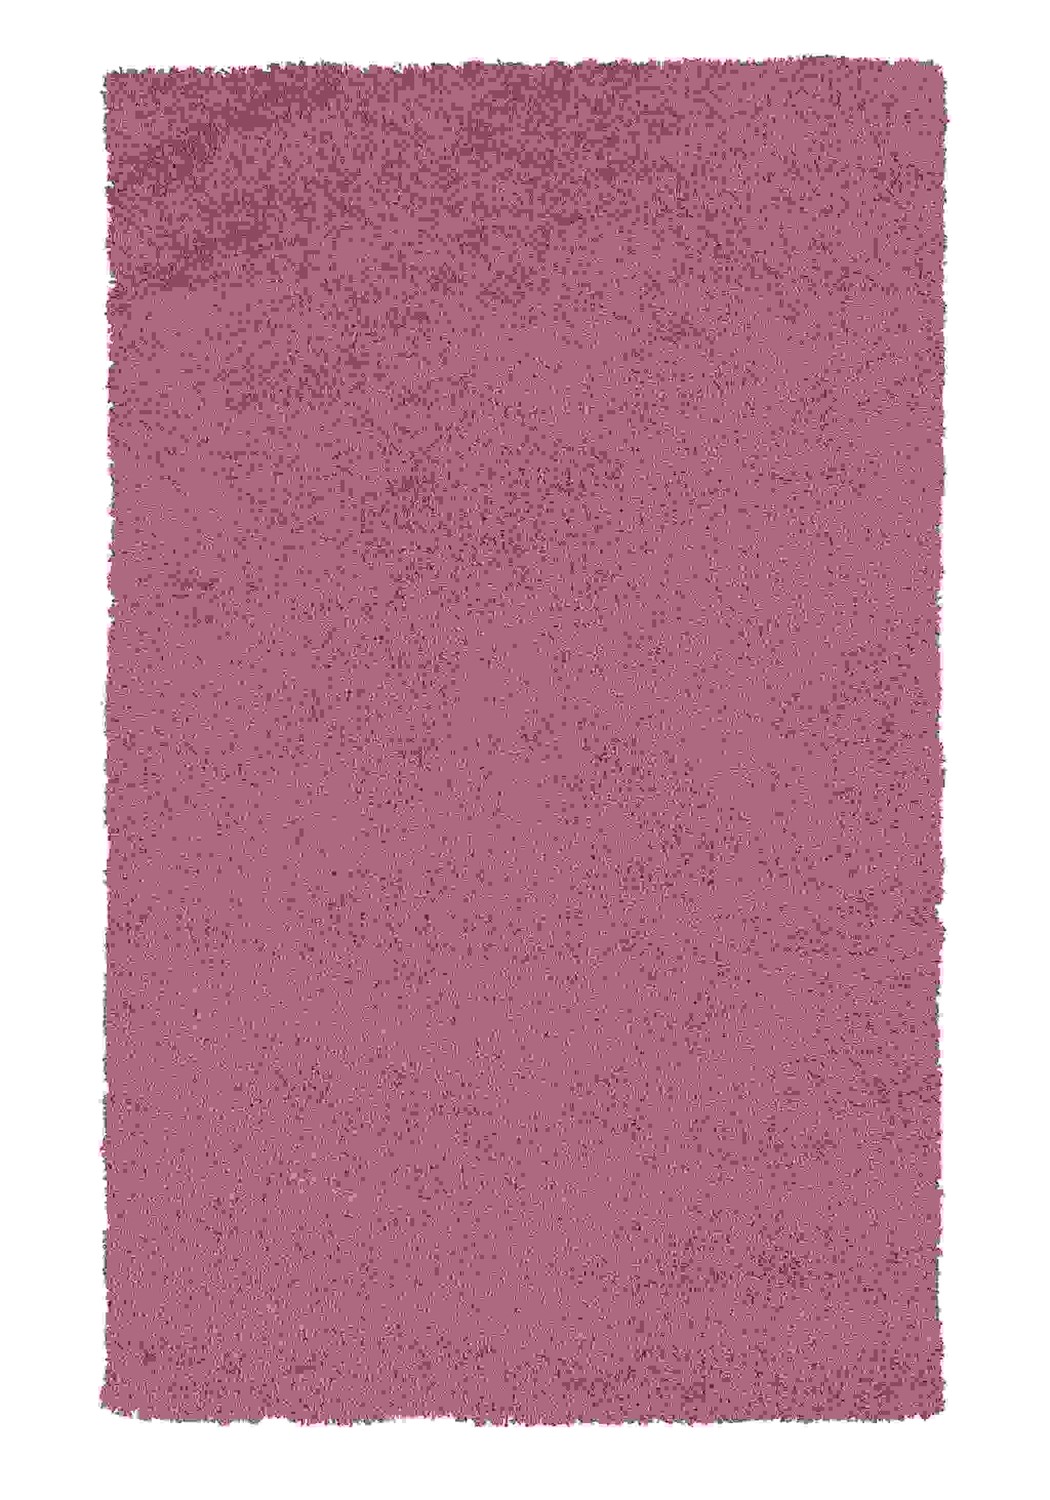 8' x 11' Bright Hot Pink Shag Area Rug